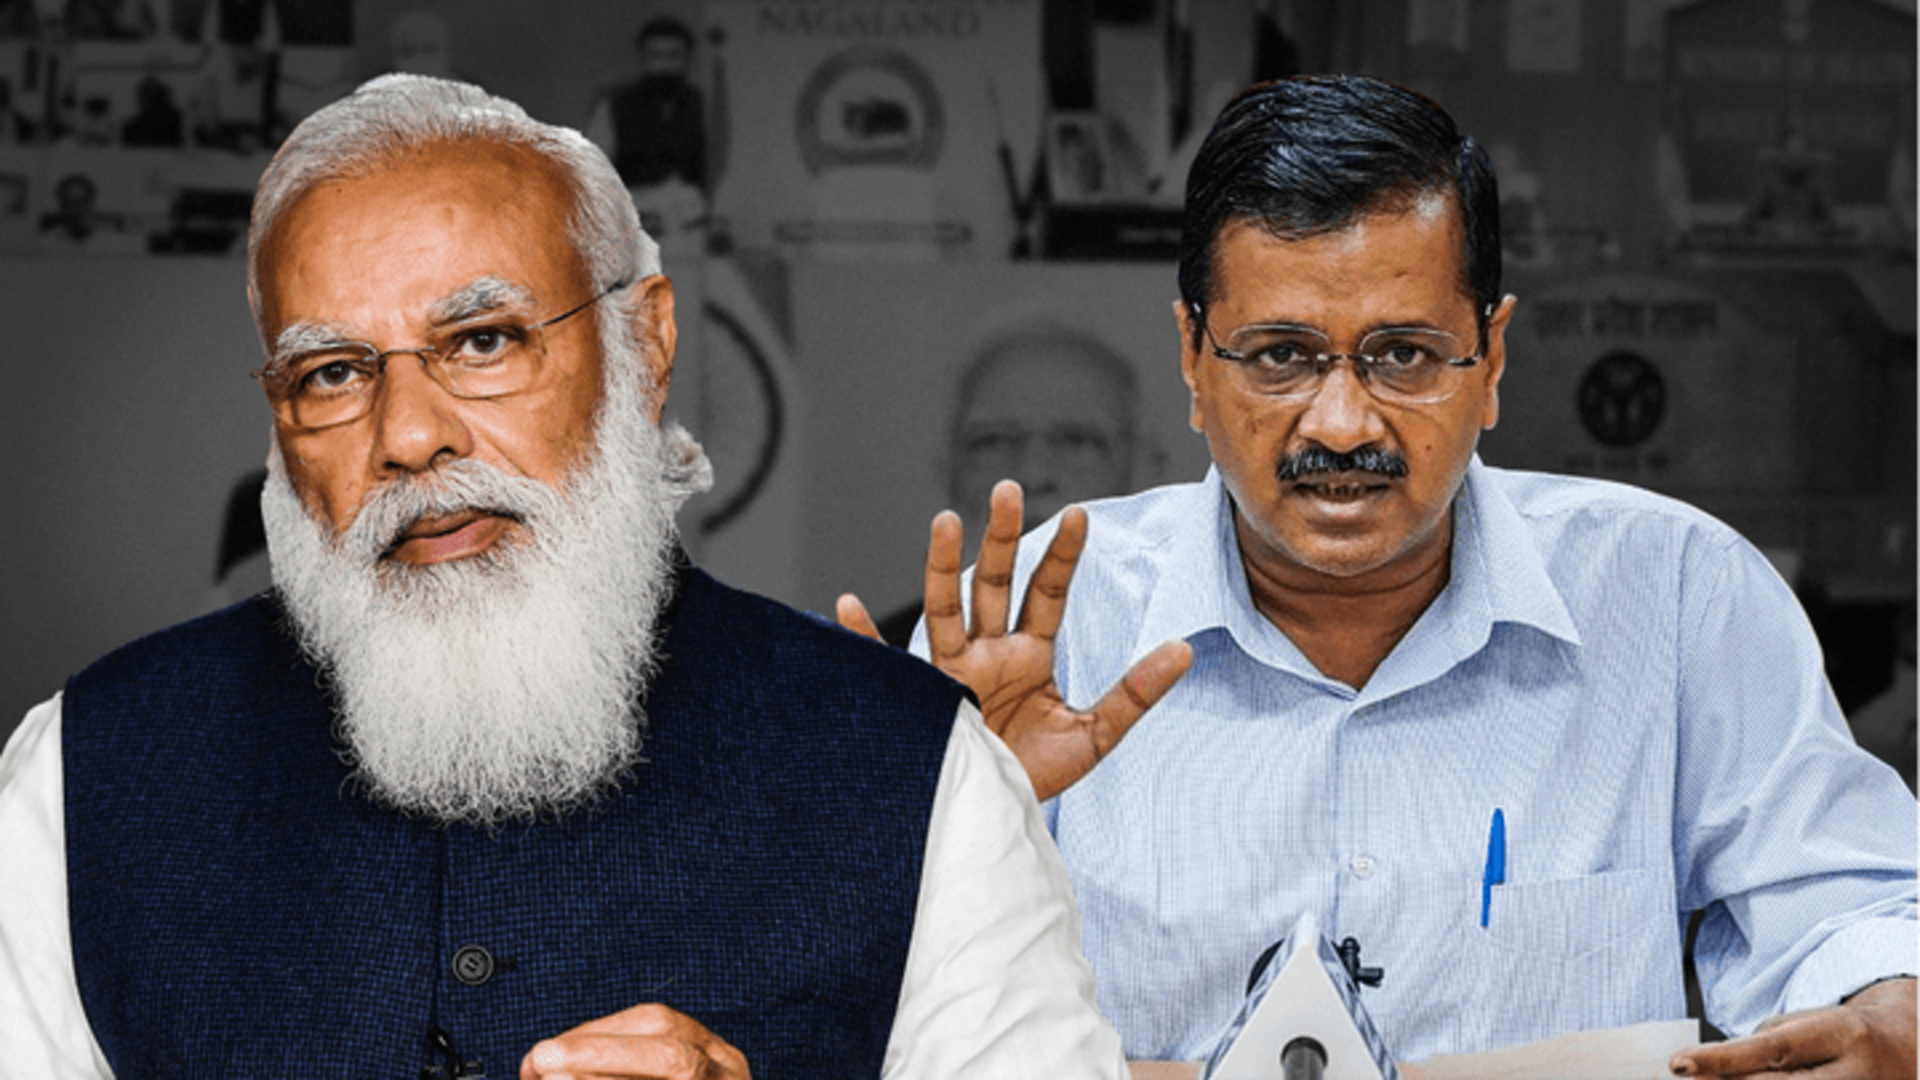 'God is watching': Kejriwal slams Modi over Satyendar Jain's hospitalization